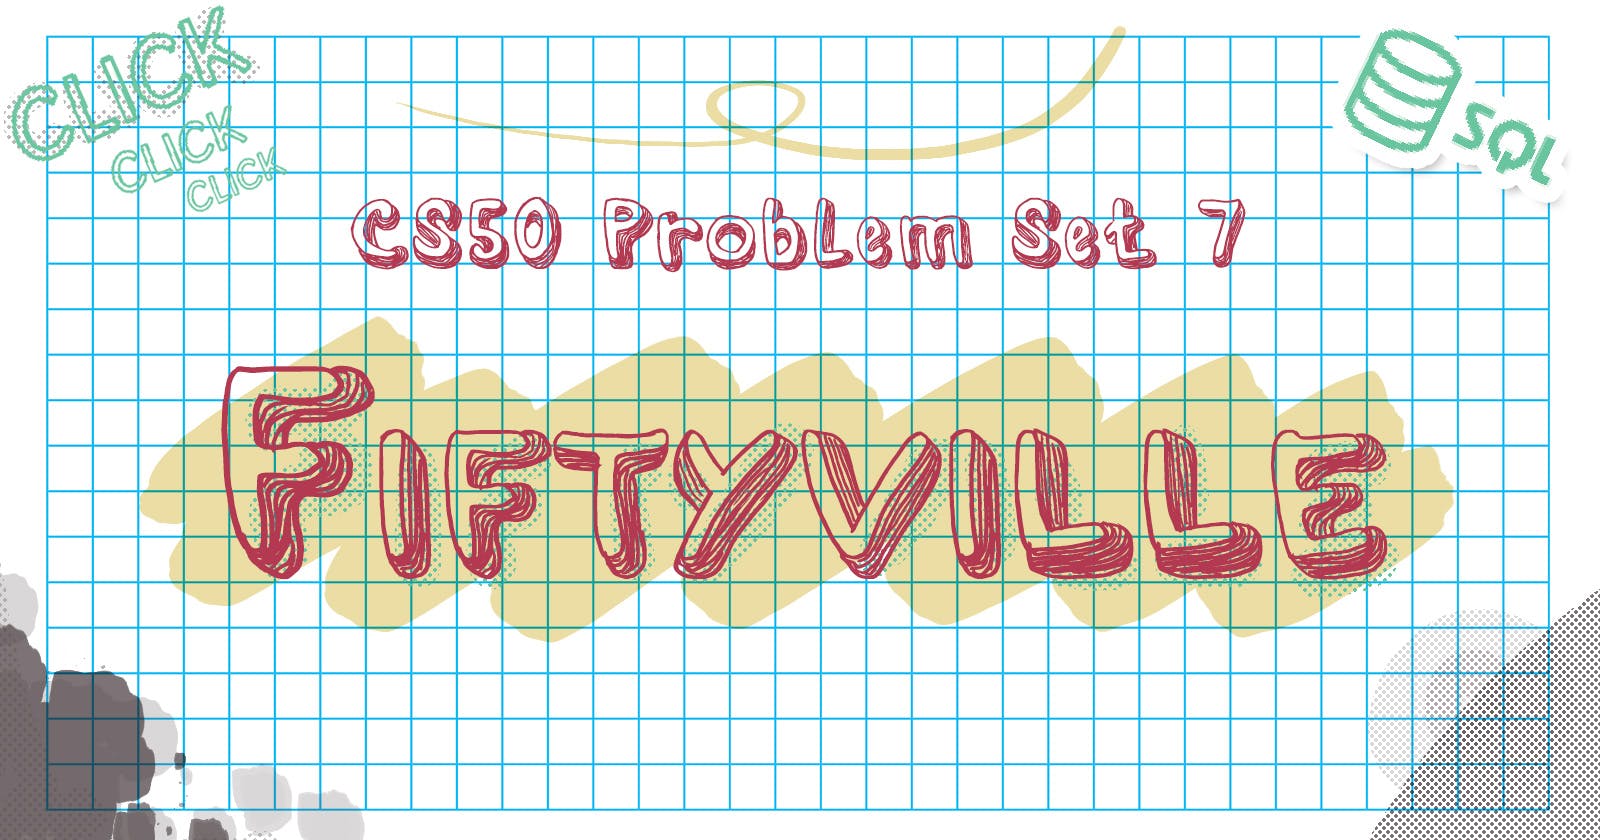 CS50 Problem Set 7 - FiftyVille